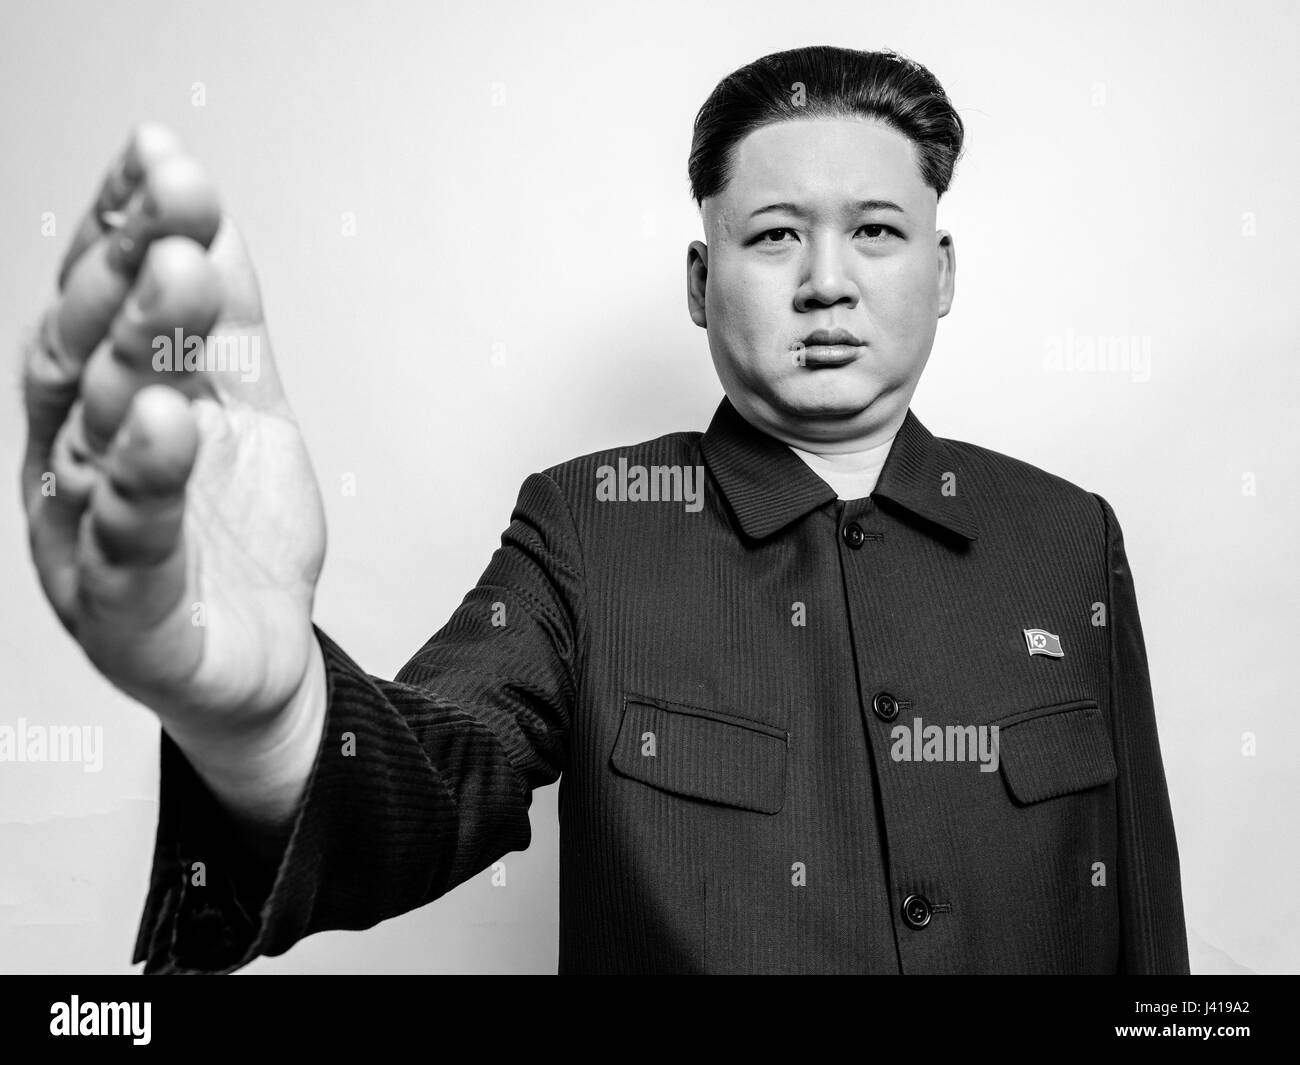 Supreme Leader of North Korea Kim Jong Un lookalike during his visit to Hong Kong.  Kim Jong-Un posed for studio portraits and met Obama and Trump. Stock Photo